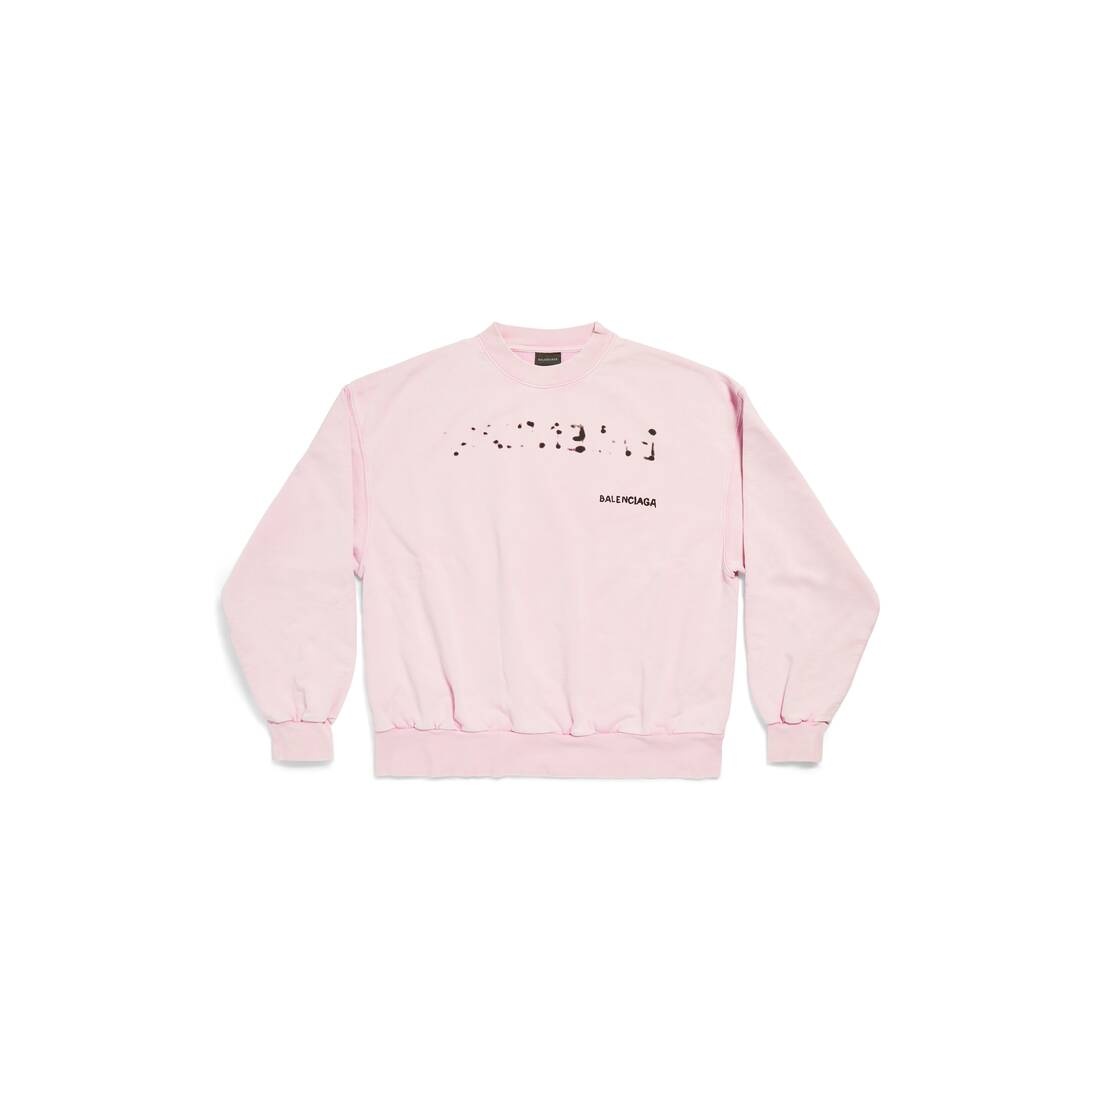 Hand Drawn Balenciaga Sweatshirt Regular Fit in Pink - 1